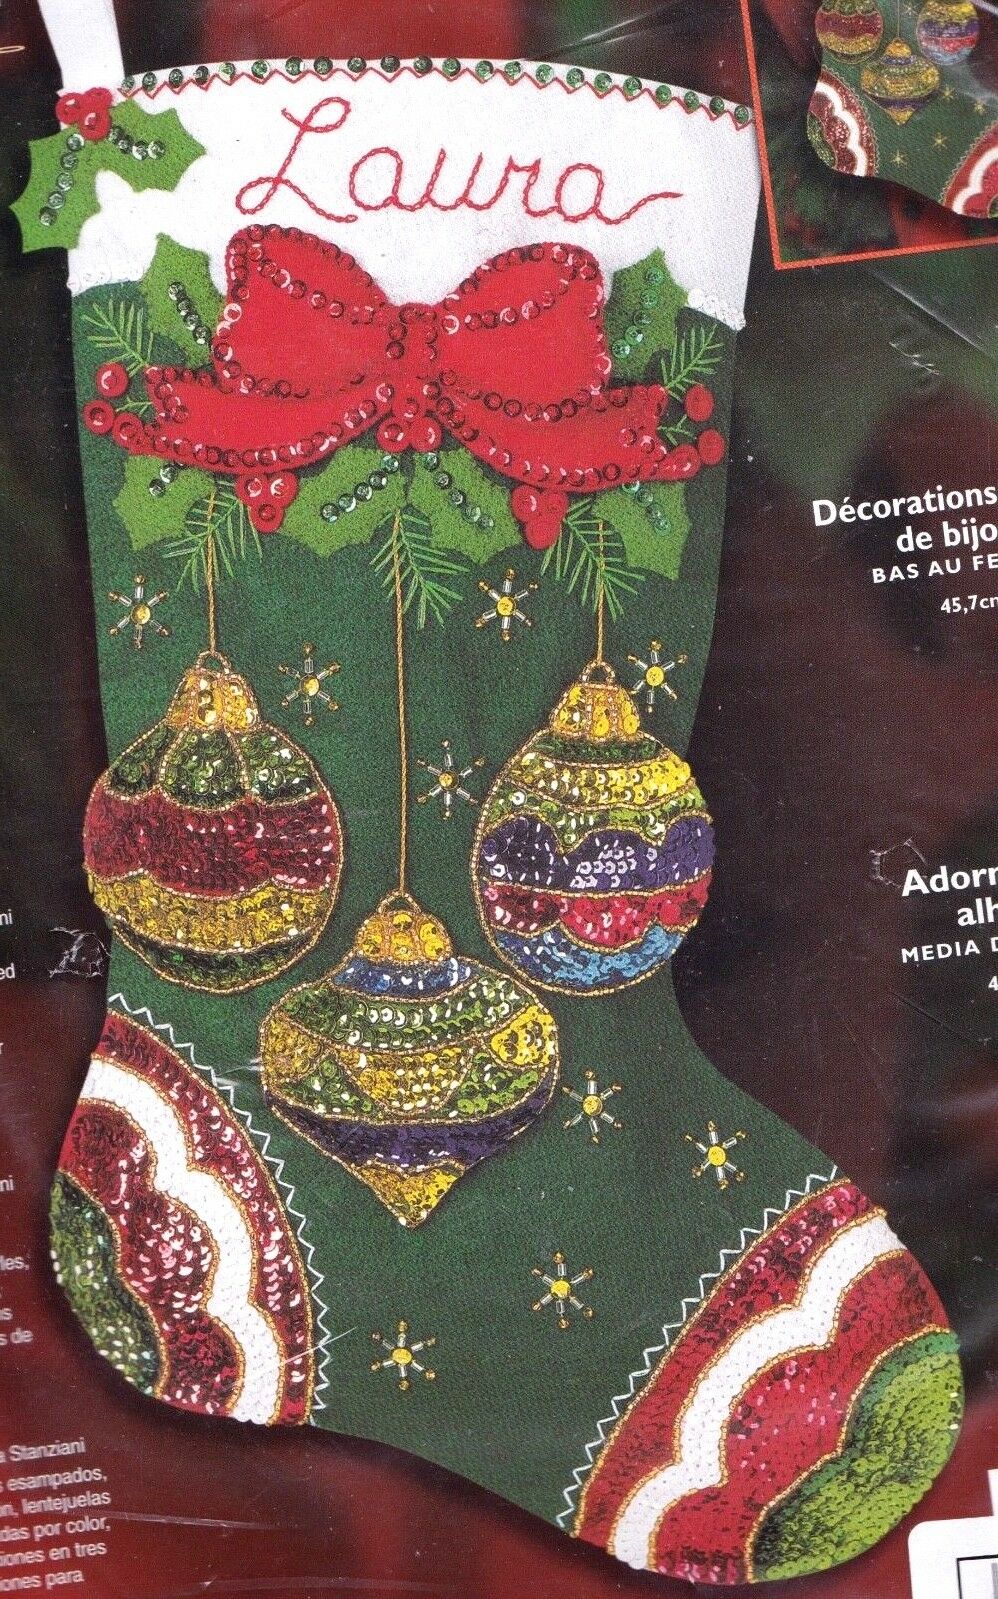 DIY Bucilla Jeweled Ornaments Sparkle Christmas Holiday Felt Stocking Kit 84949